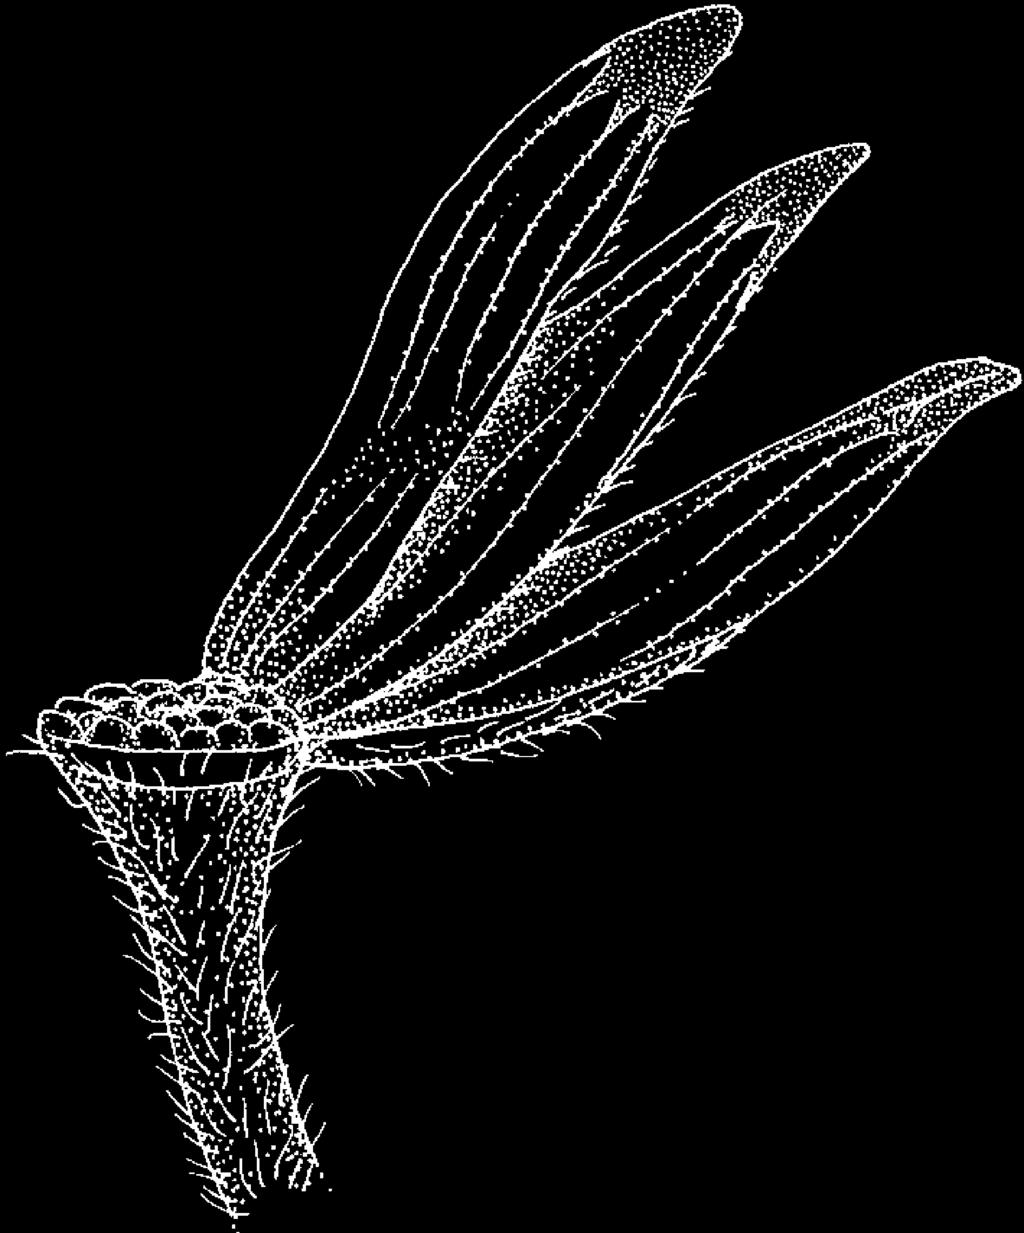 with distinct phyllaries. Fig. 87. Ray floret of Chapt alia integerrima (Vell.) Burkart.